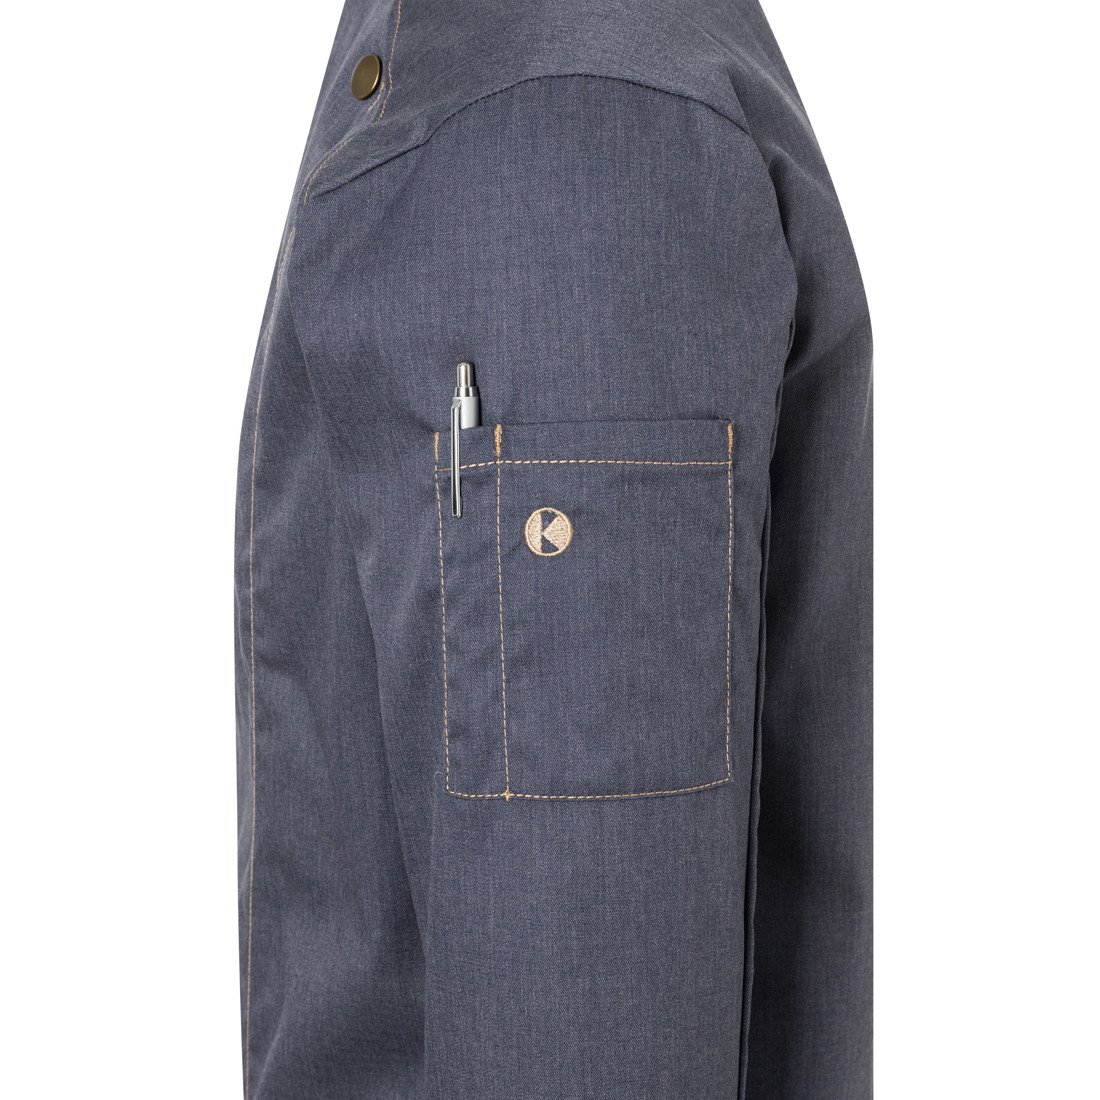 Kochjacke Jeans-Style - Arbeitskleidung